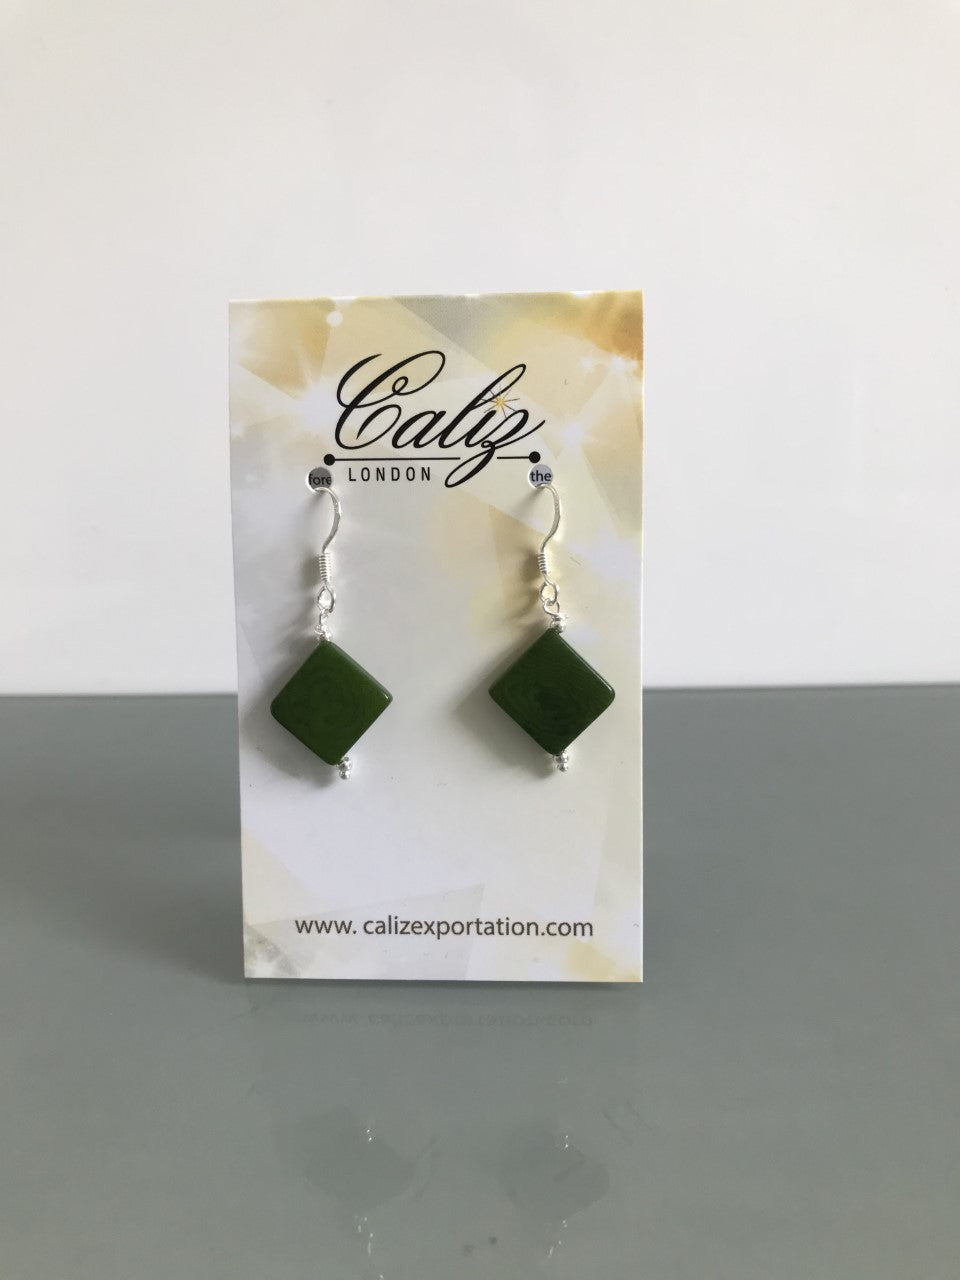 Diamantico earrings (11mm) - Green Hunter